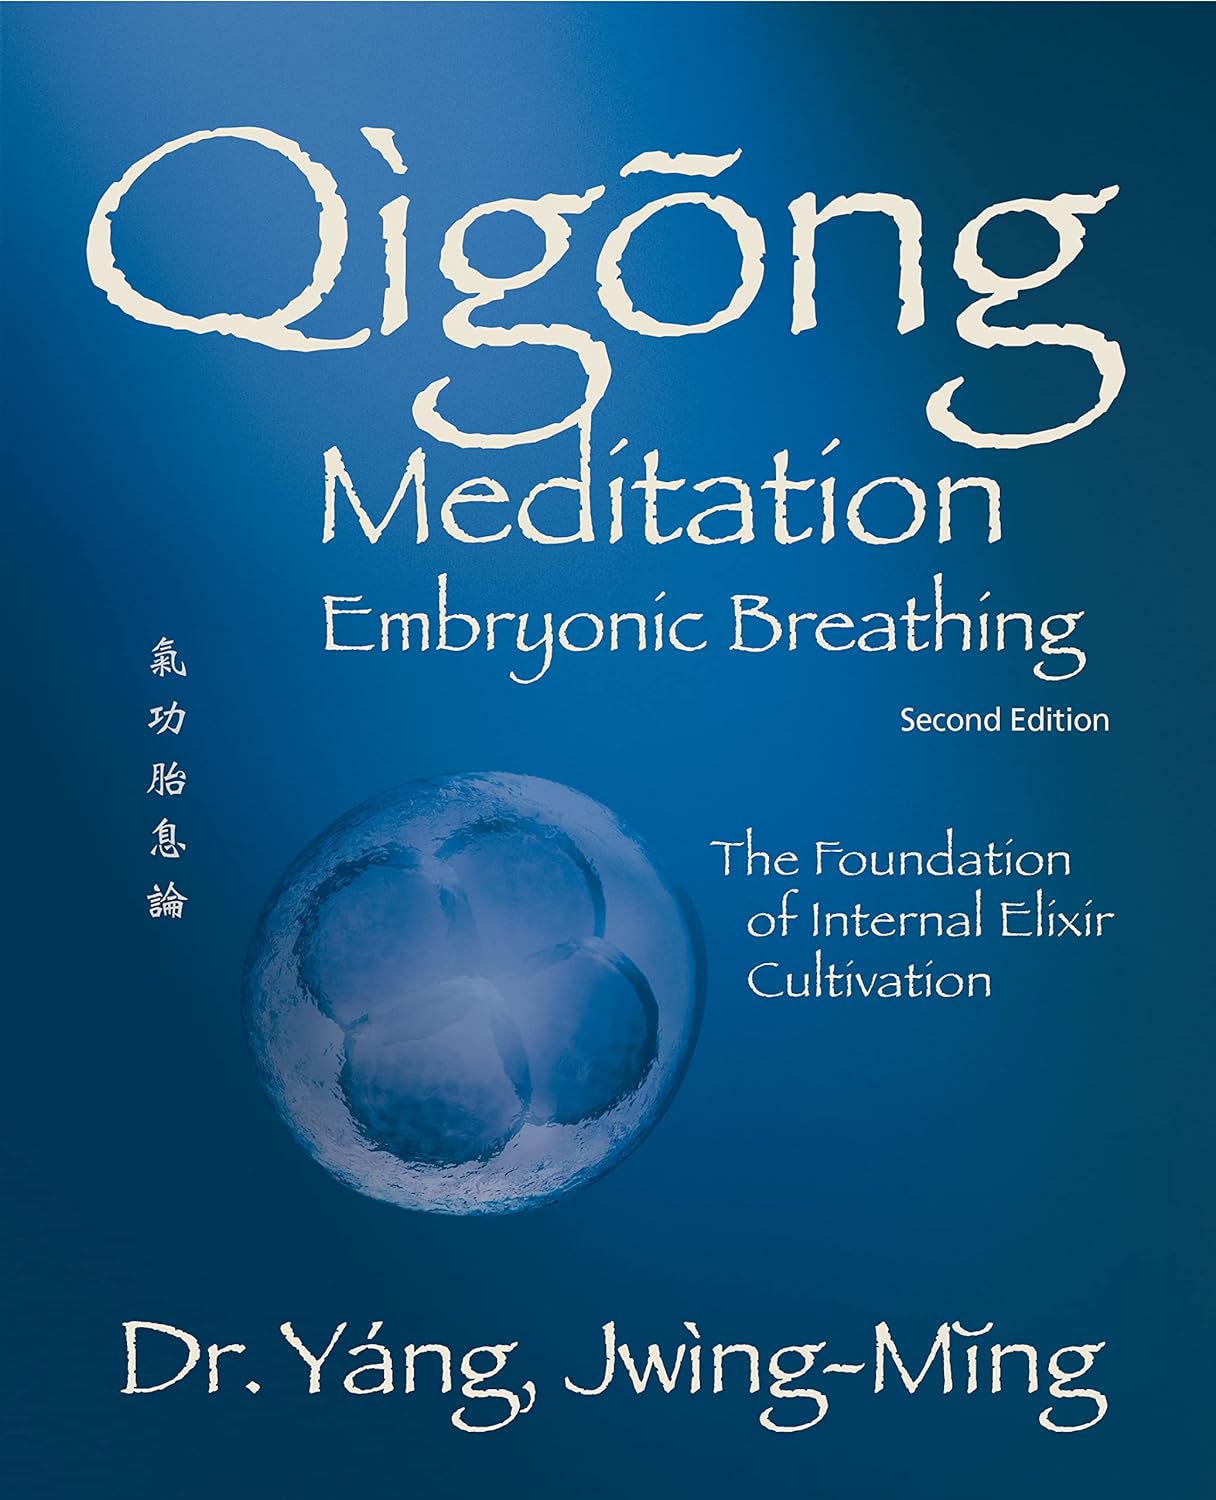 Qigong Meditation: Embryonic Breathing (Qigong Foundation) Book by Dr Yang, Jwing-Ming (2nd Edition)